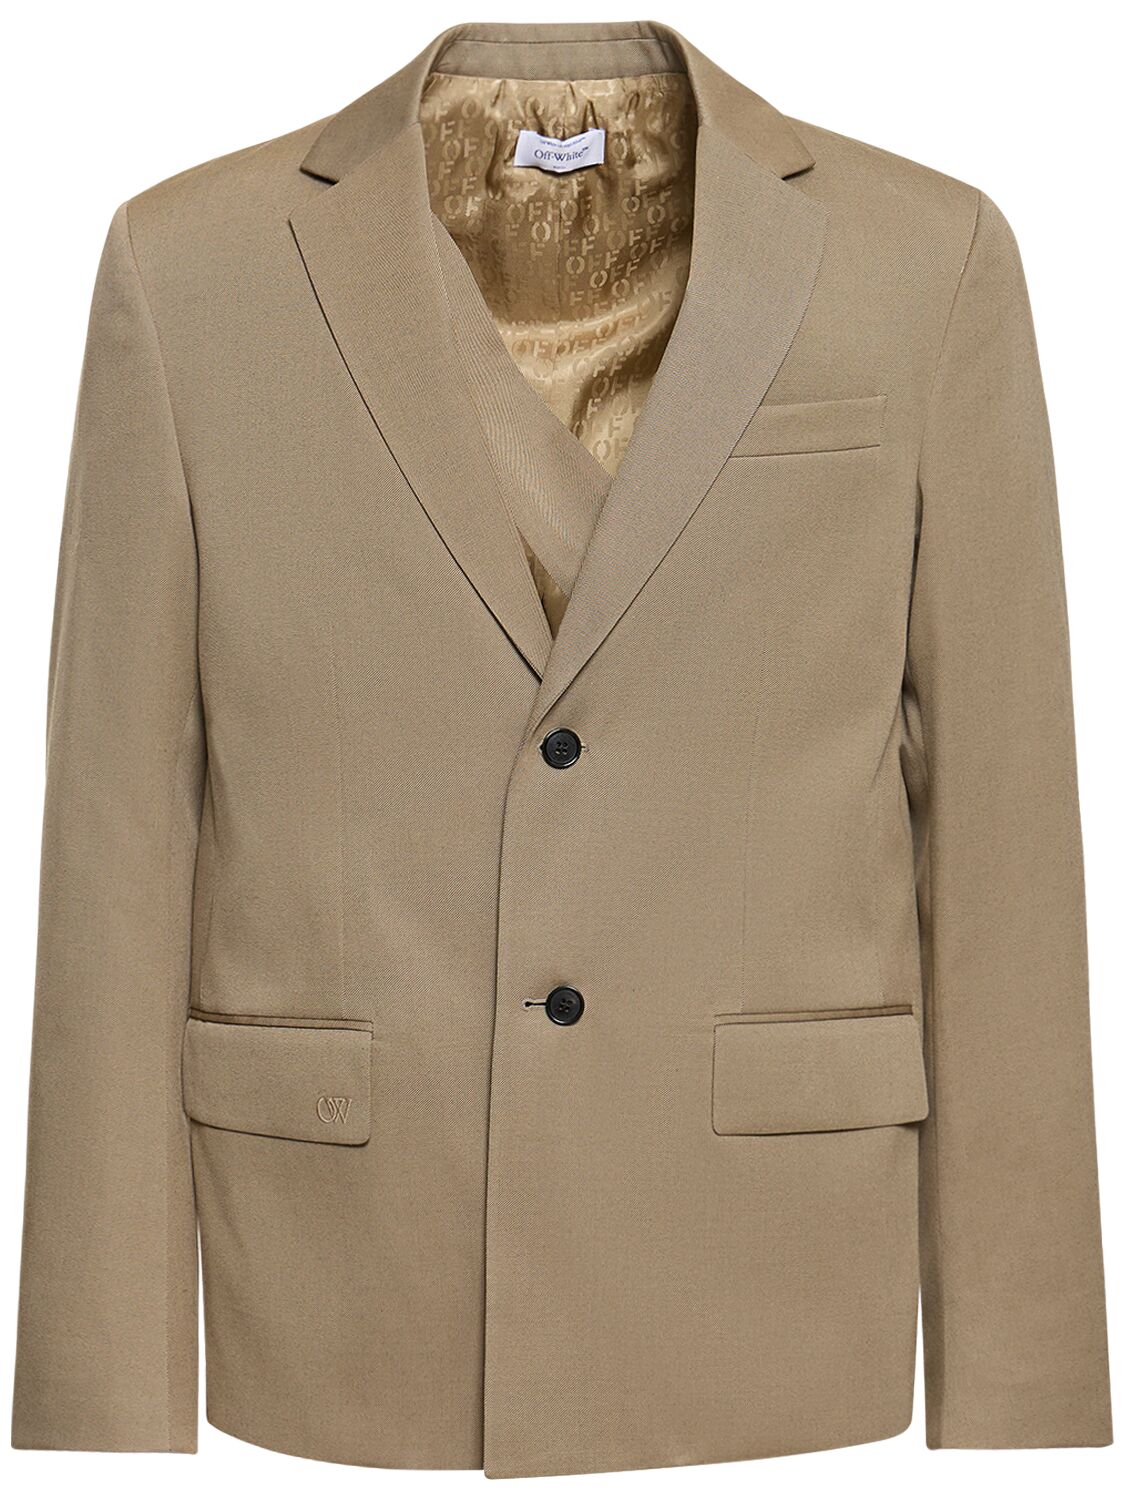 Off-White Men's Moon Phase Varsity Jacket, Sierre Leon Multi, Men's, 38R, Formalwear Tuxedos & Suits Suit Jackets